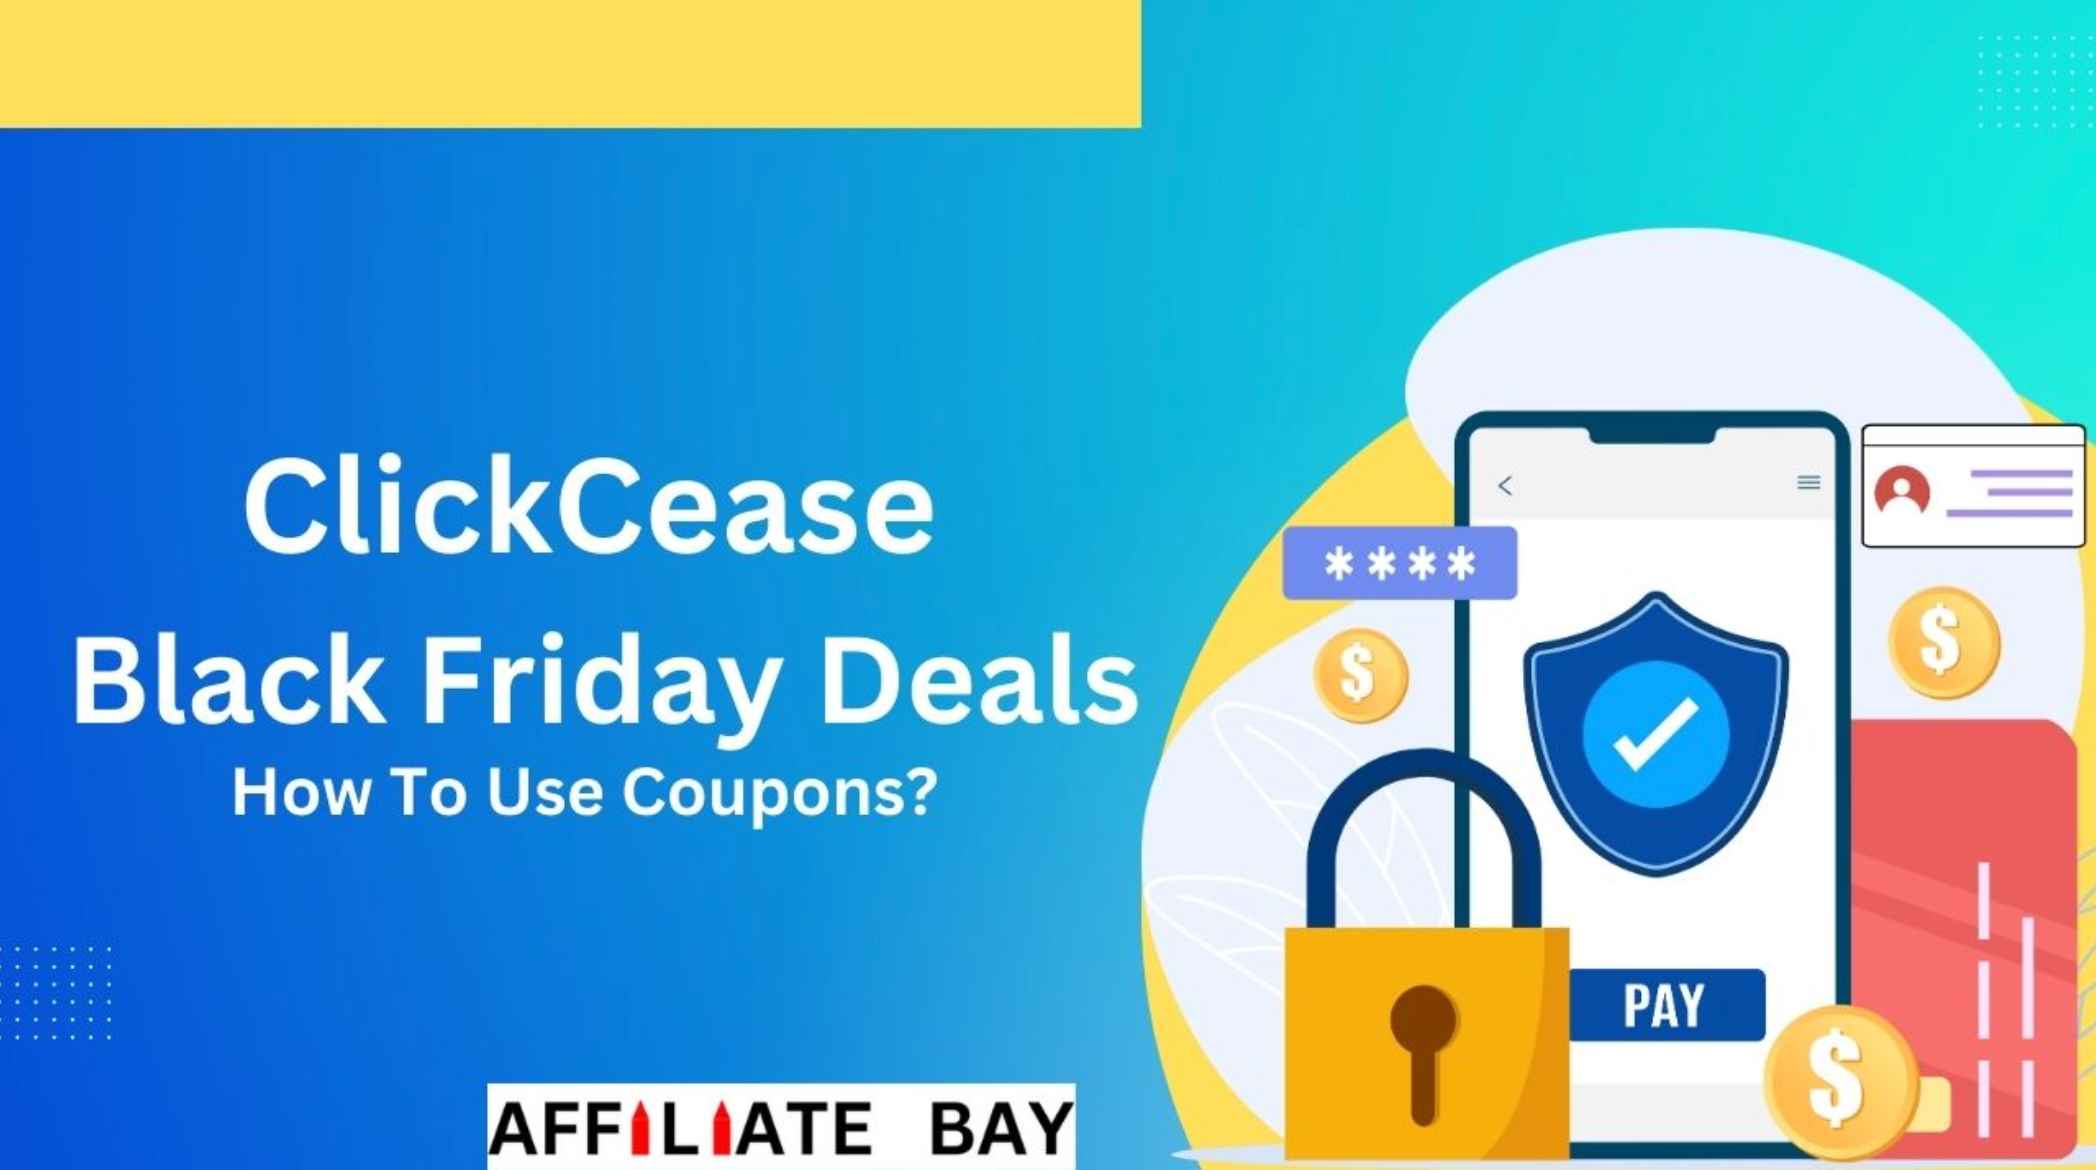 ClickCease Black Friday Deals